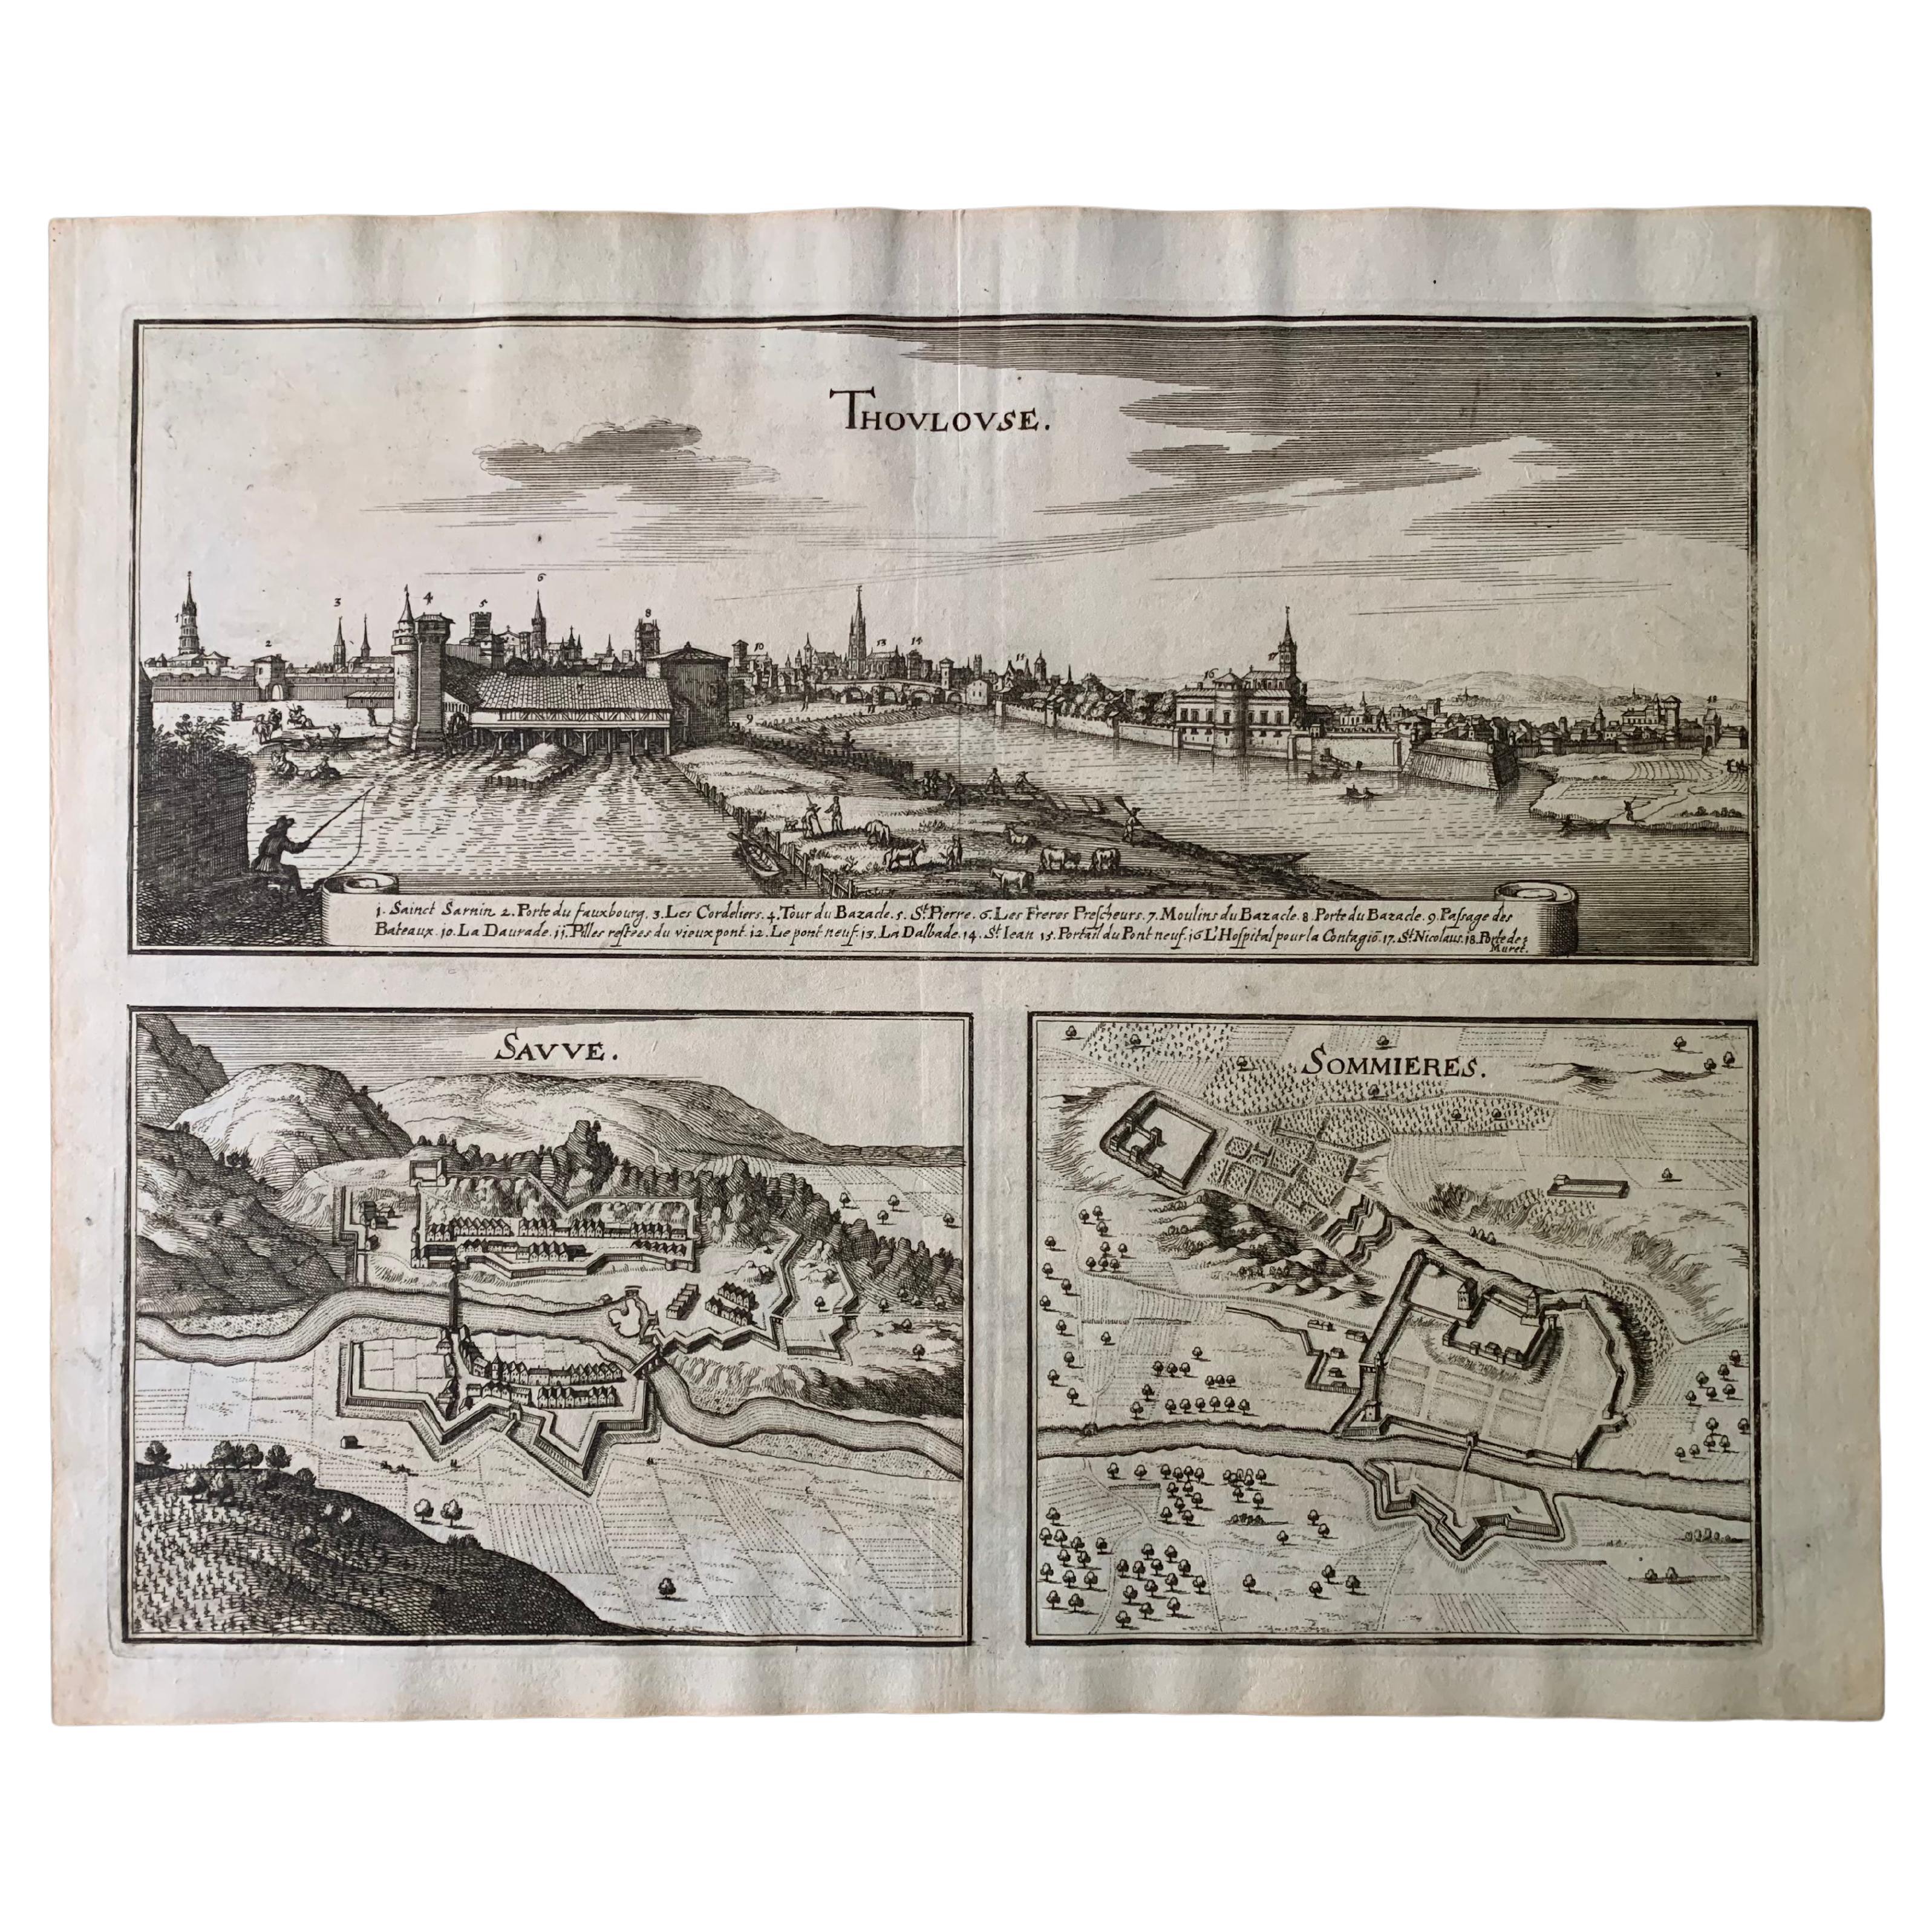 Toulouse, Savve, Sommieres, topografische Karte von Iohan Peeters, 17. Jahrhundert im Angebot